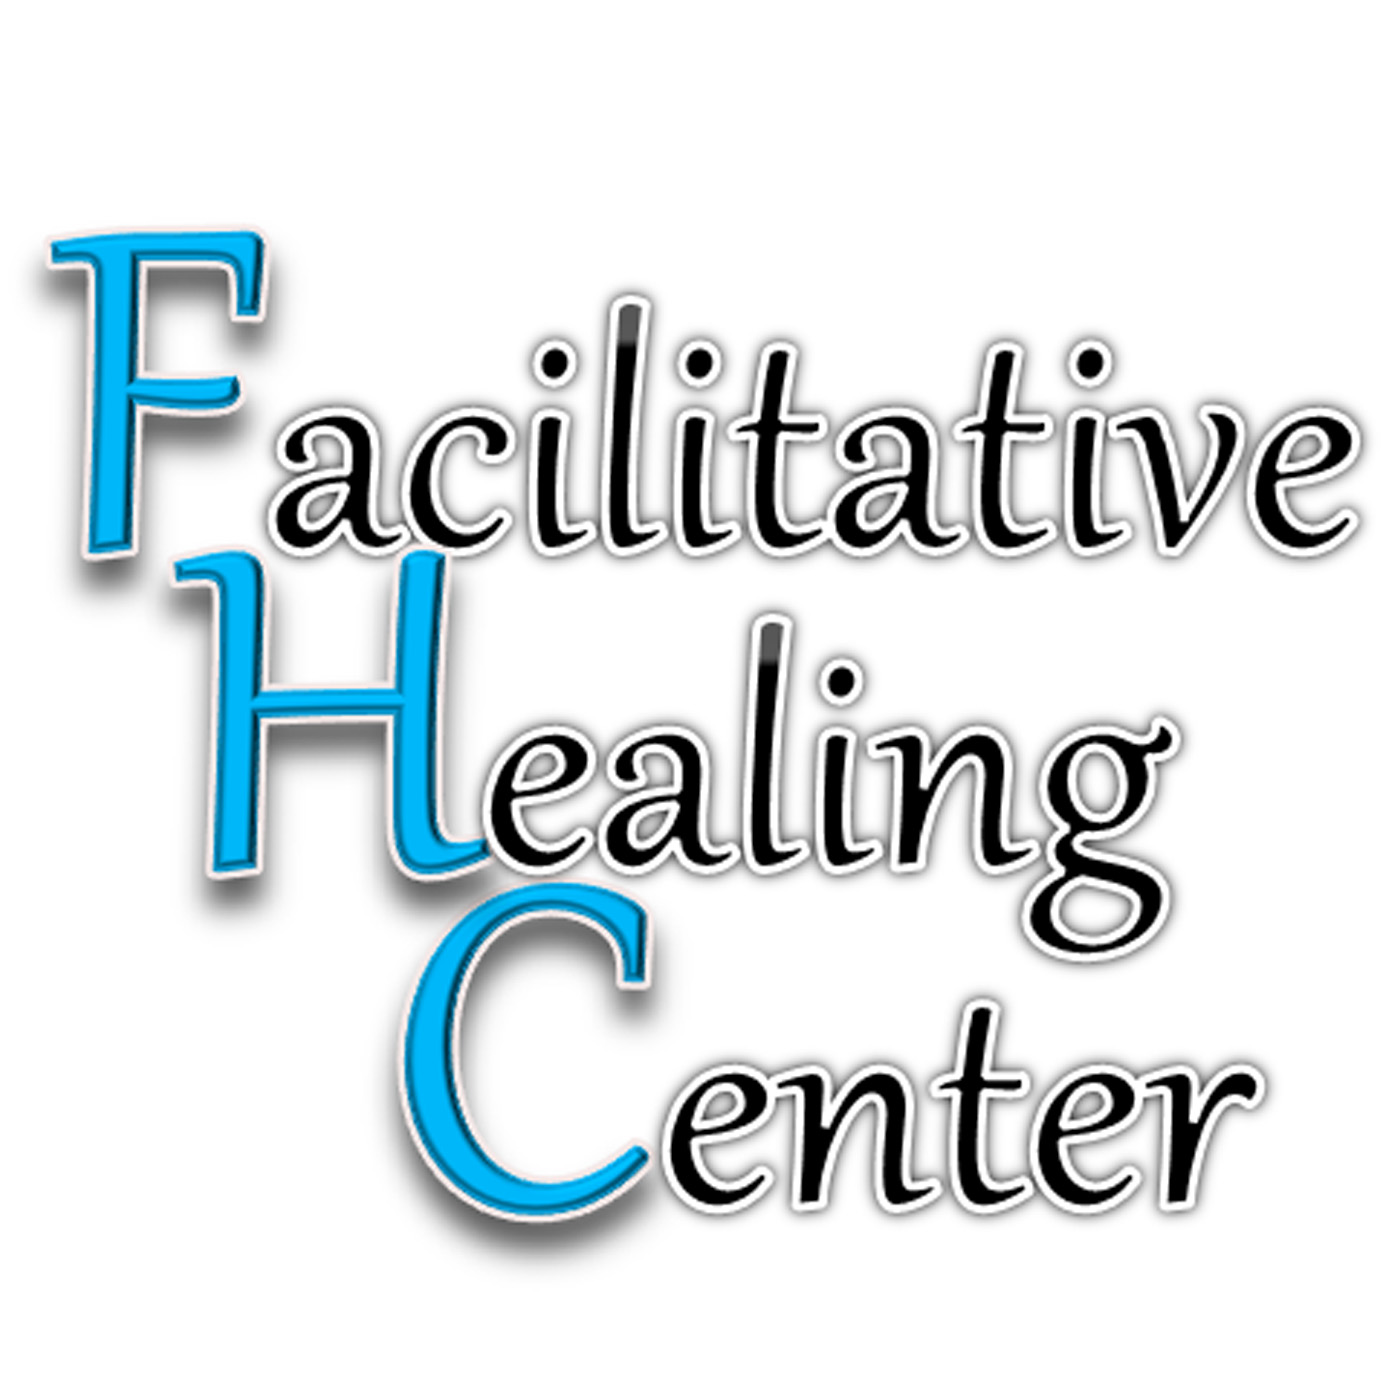 Facilitative Healing Center